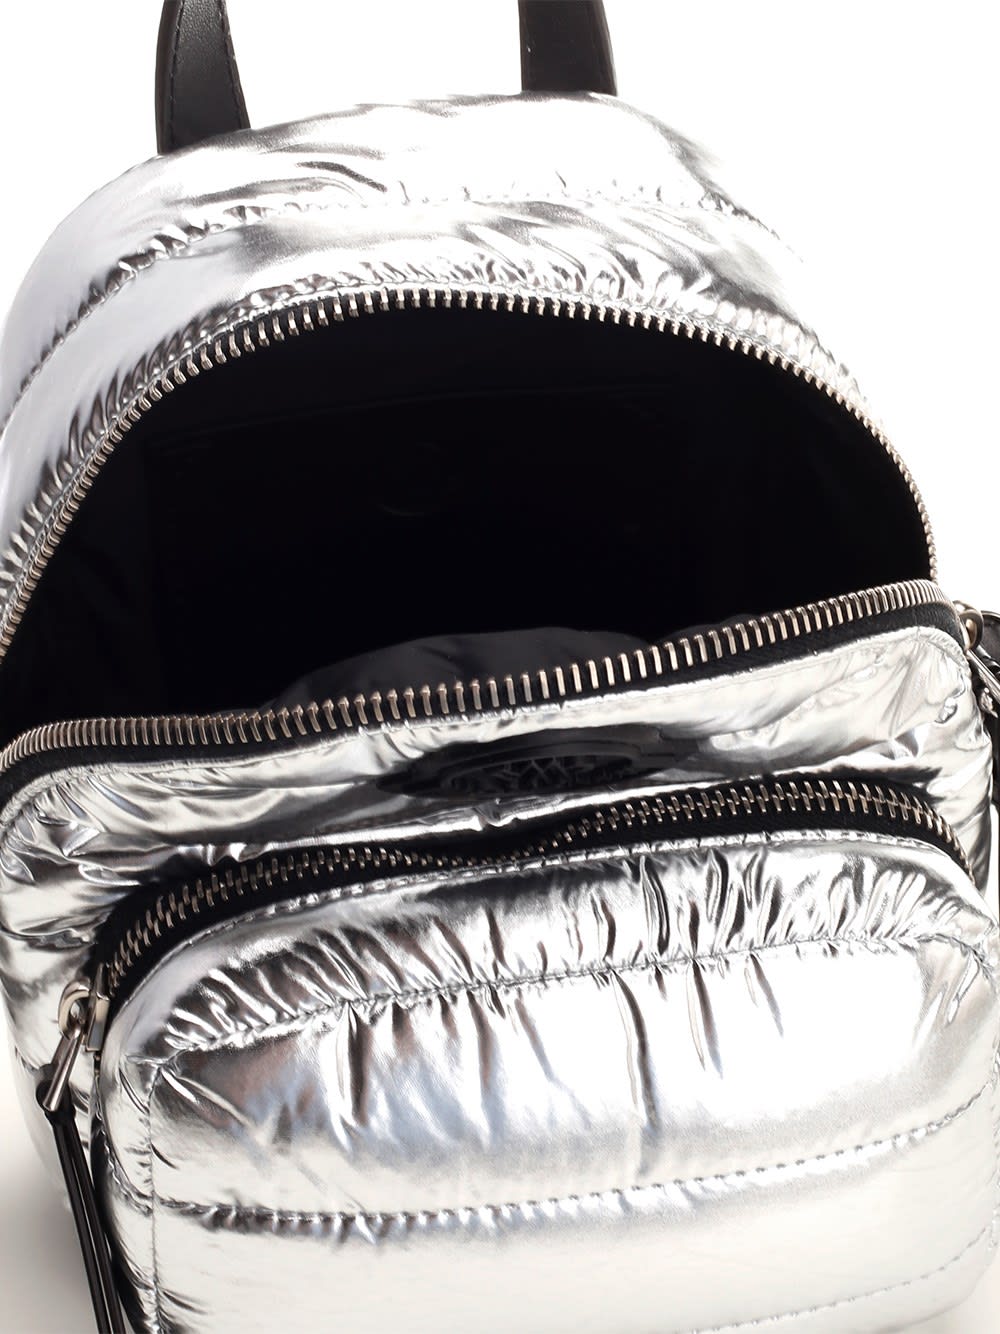 Moncler Kilia Small Crossbody Metallic Puffer Backpack